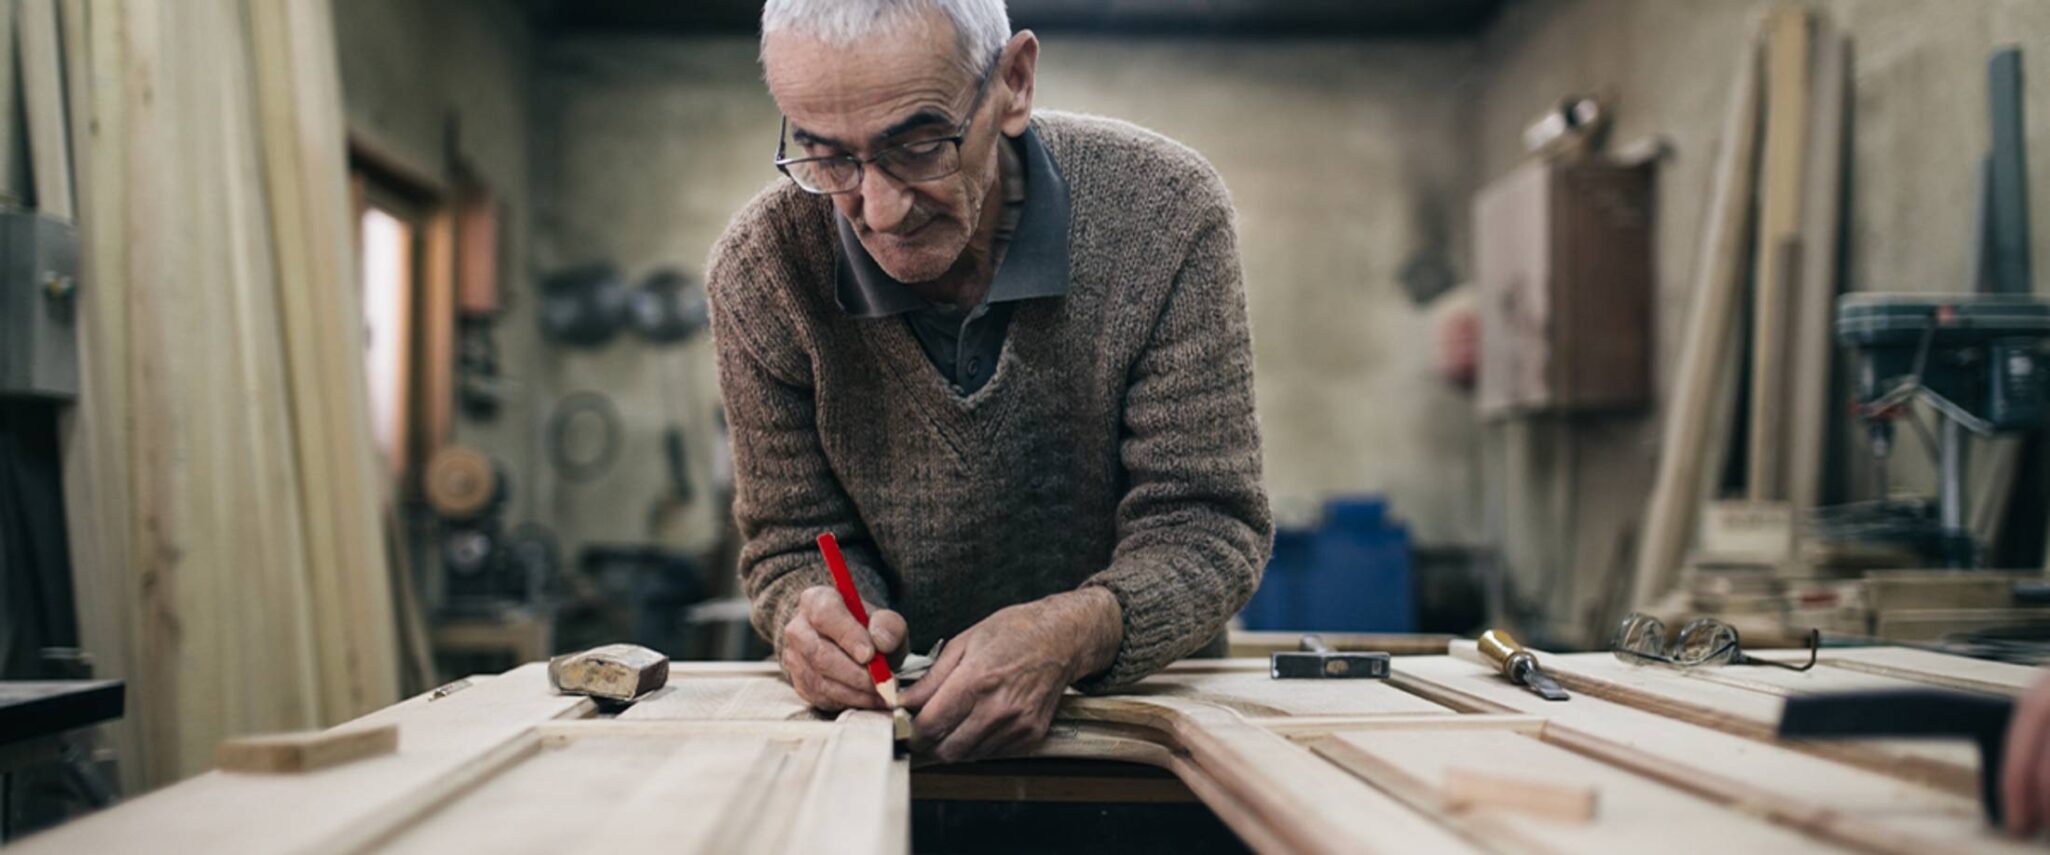 Elderly man woodworking in a senior living community